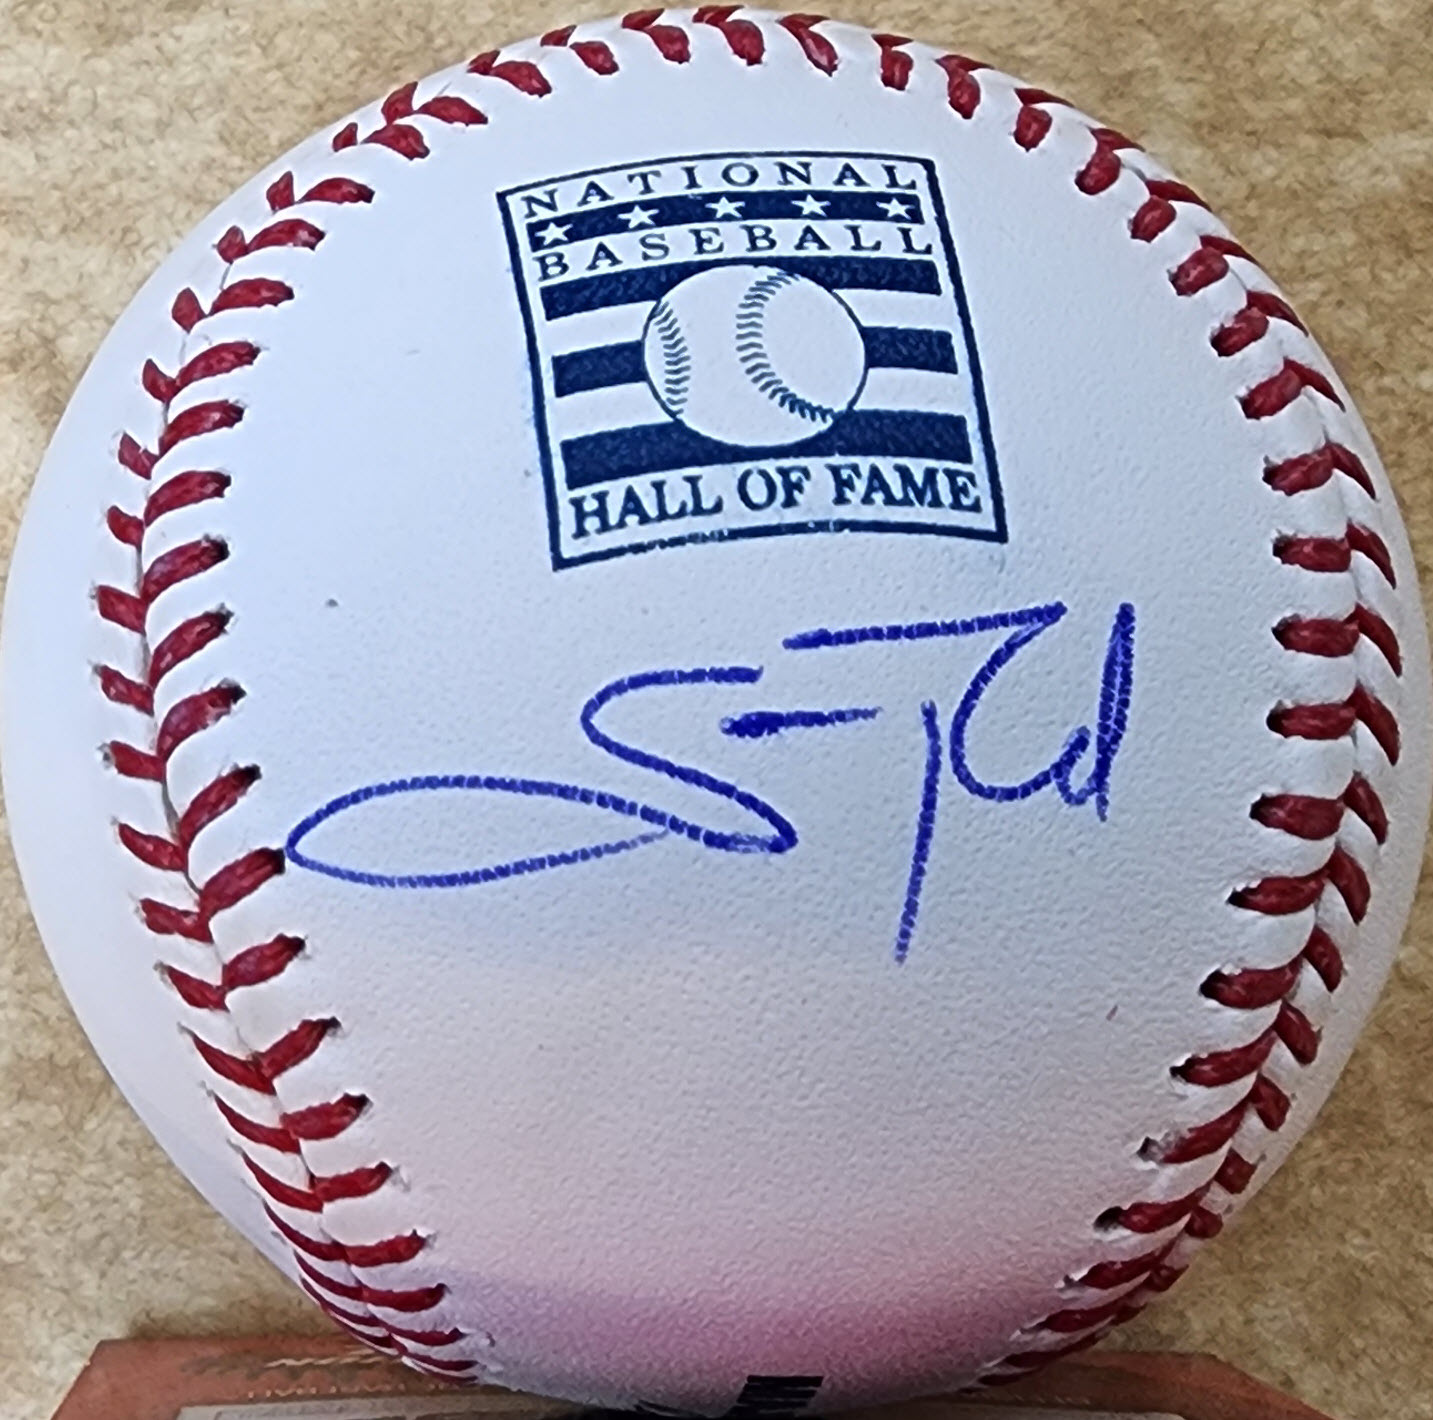 Scott Rolen Autographed HOF Baseball Under Logo v1